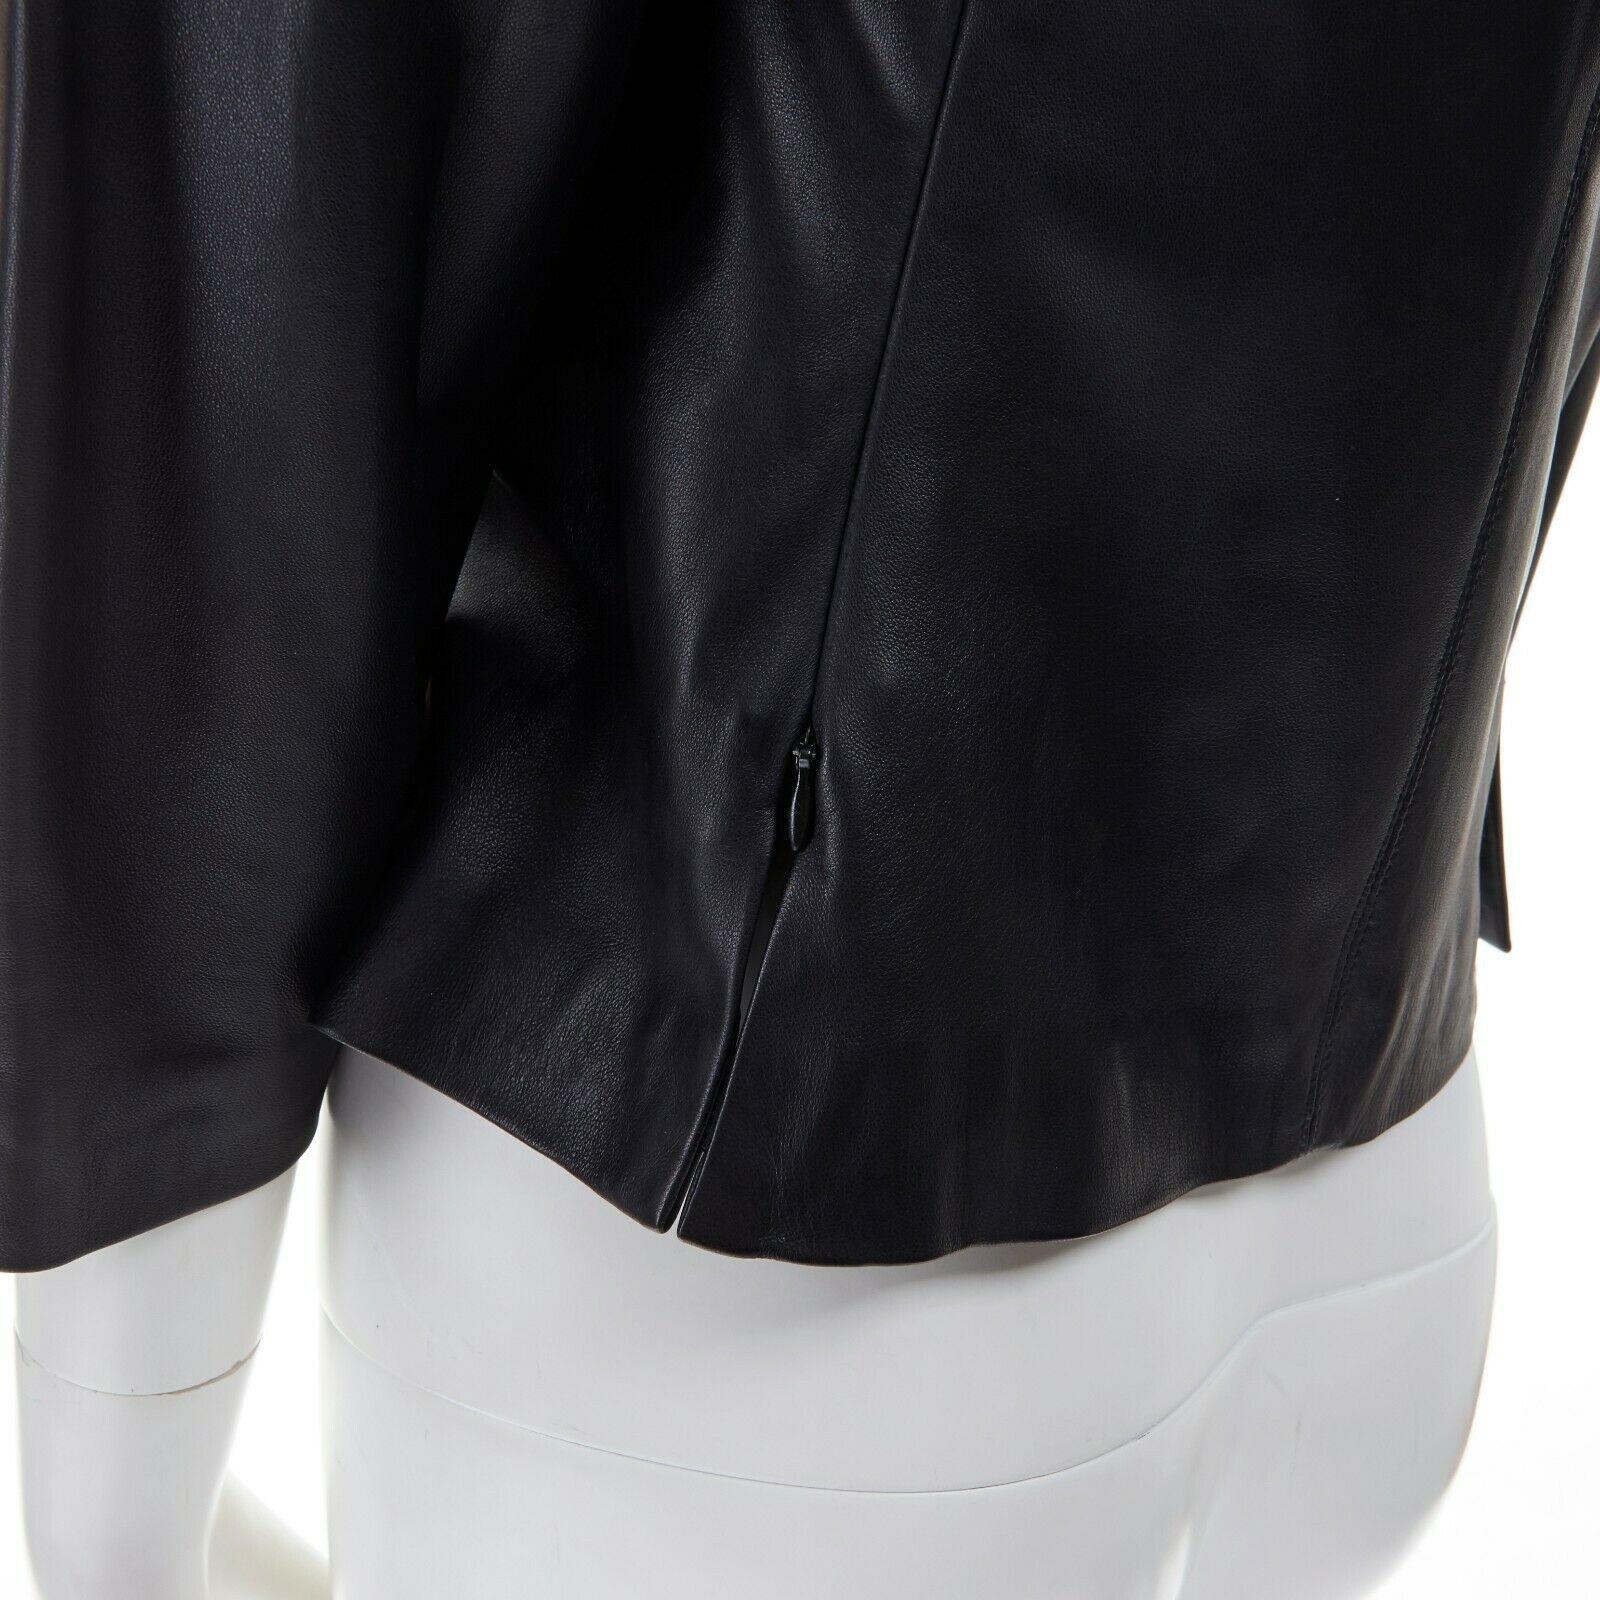 DONNA KARAN 100% lambskin leather wide angular neckline 3/4 sleeves top US4 S 4